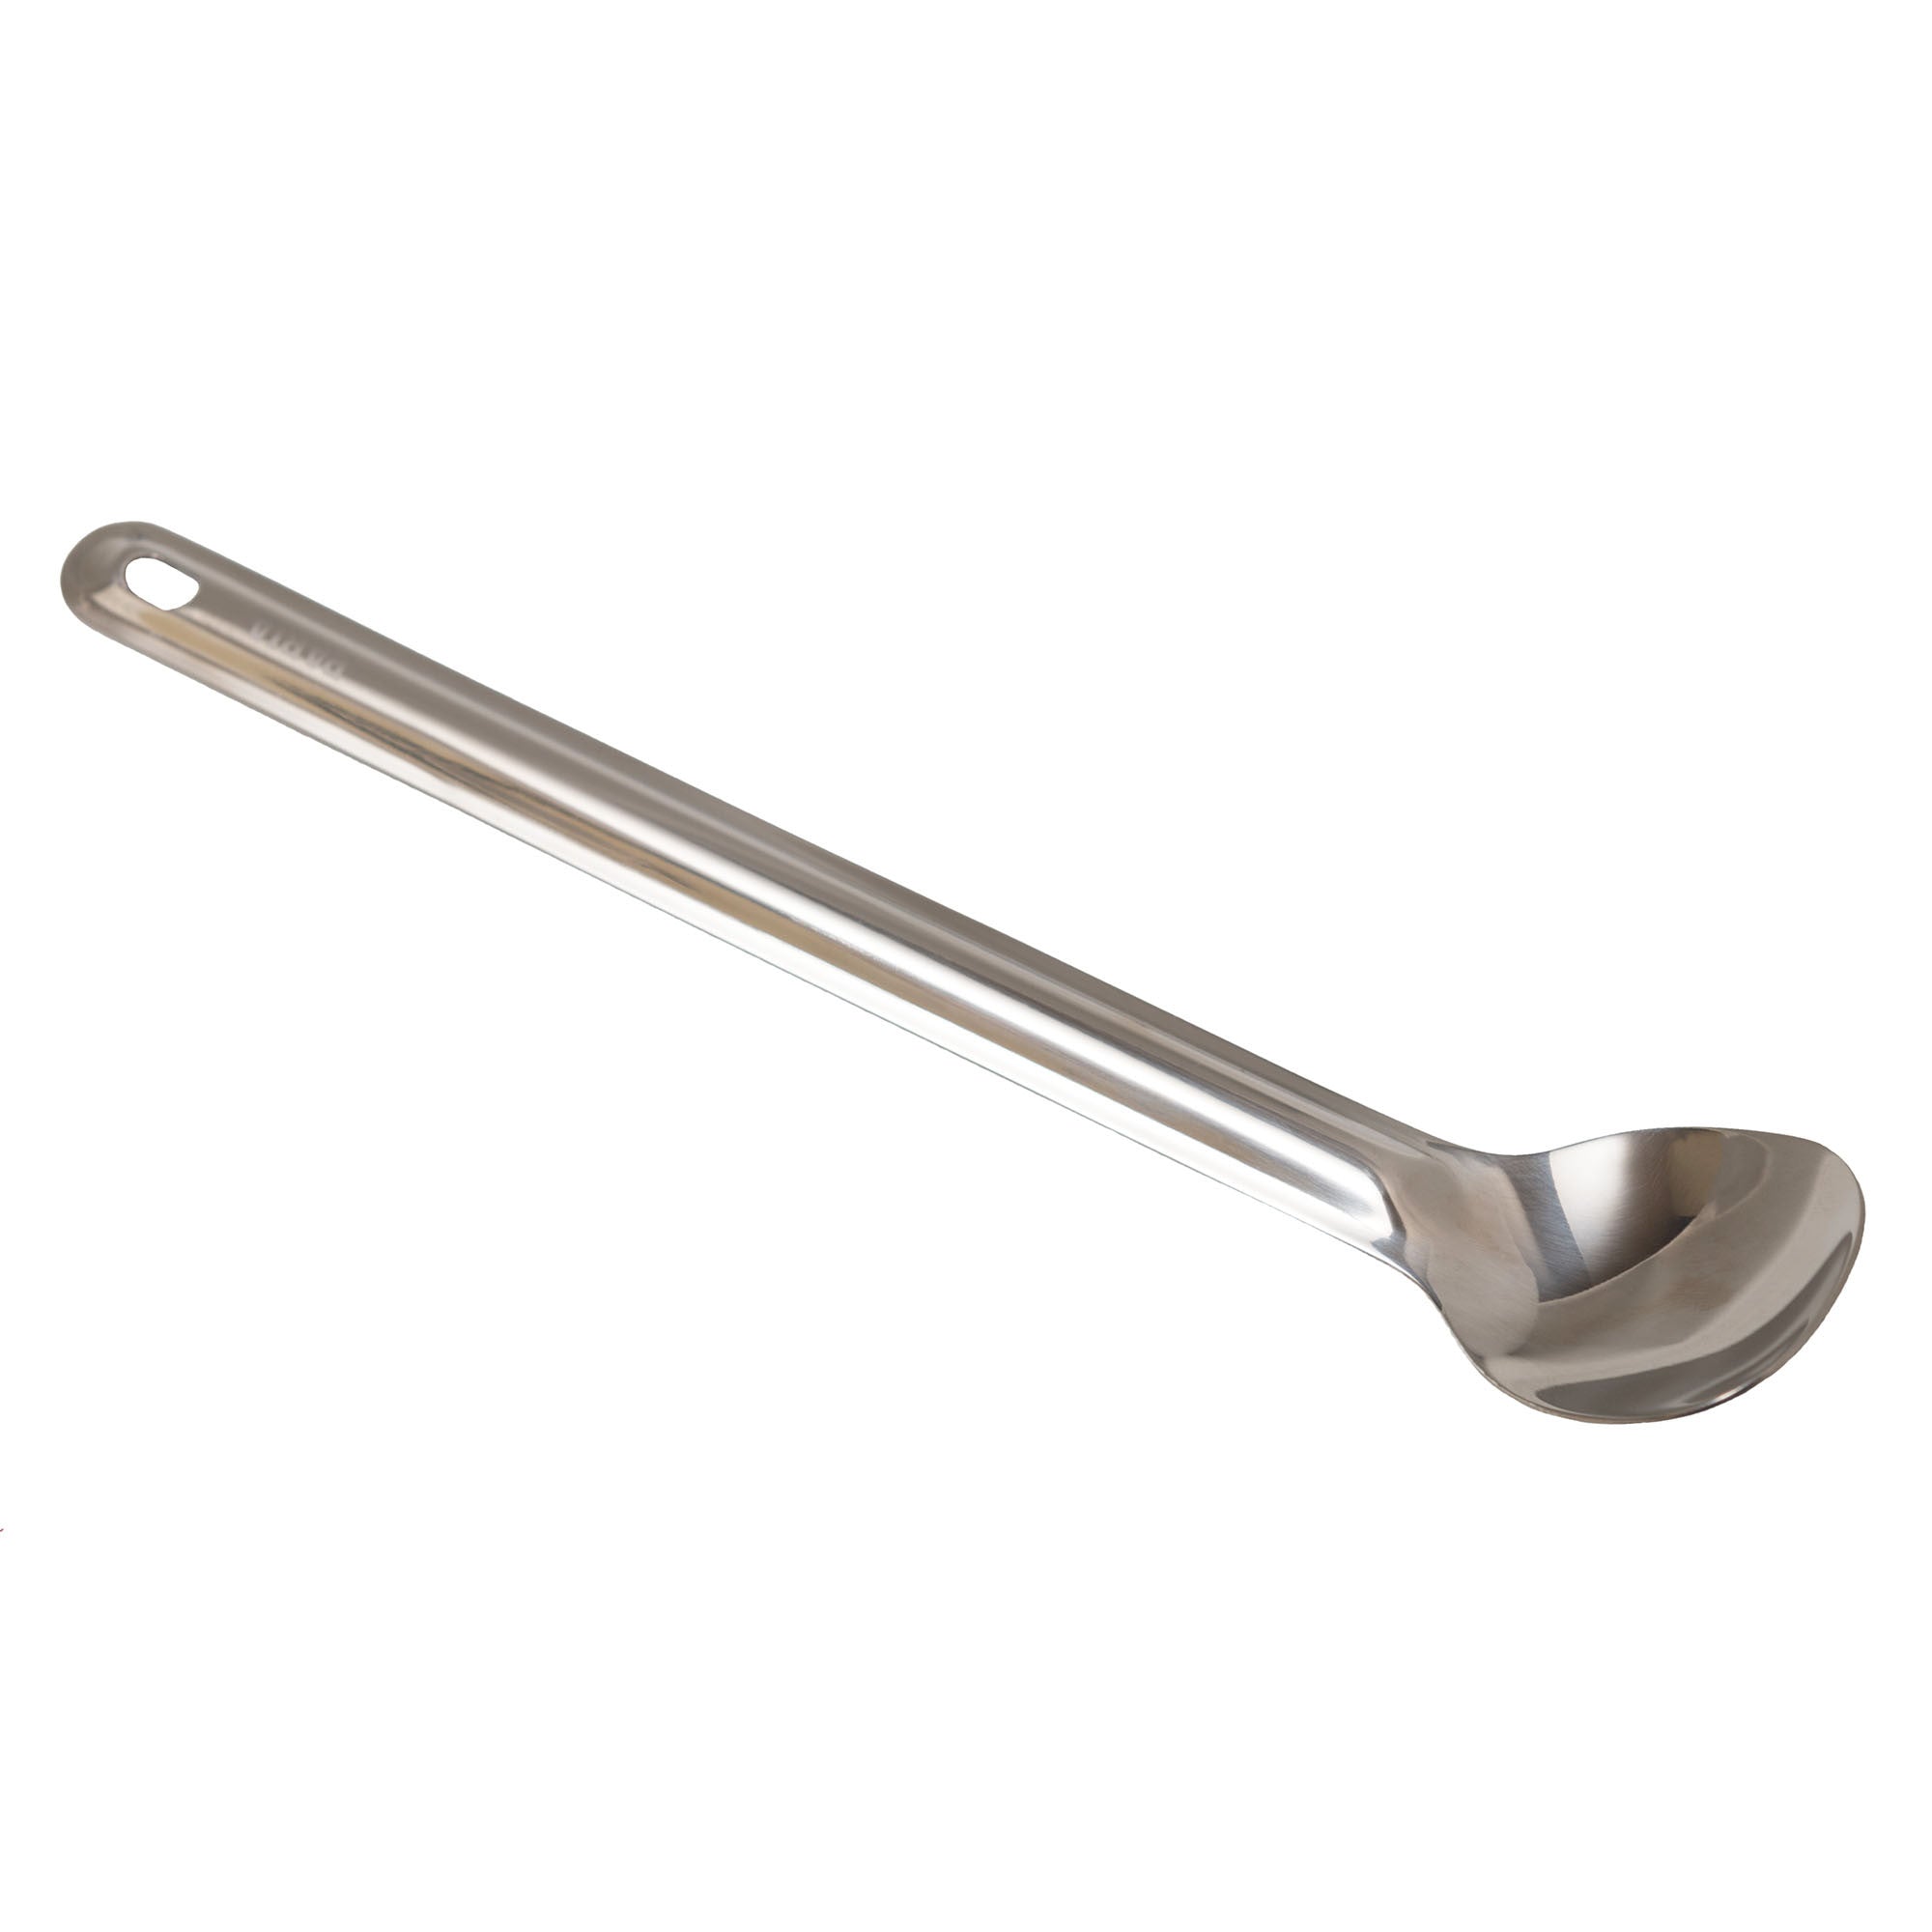 Ultralight outdoor camping titanium spork titanium spoon fork silver color MJSG 